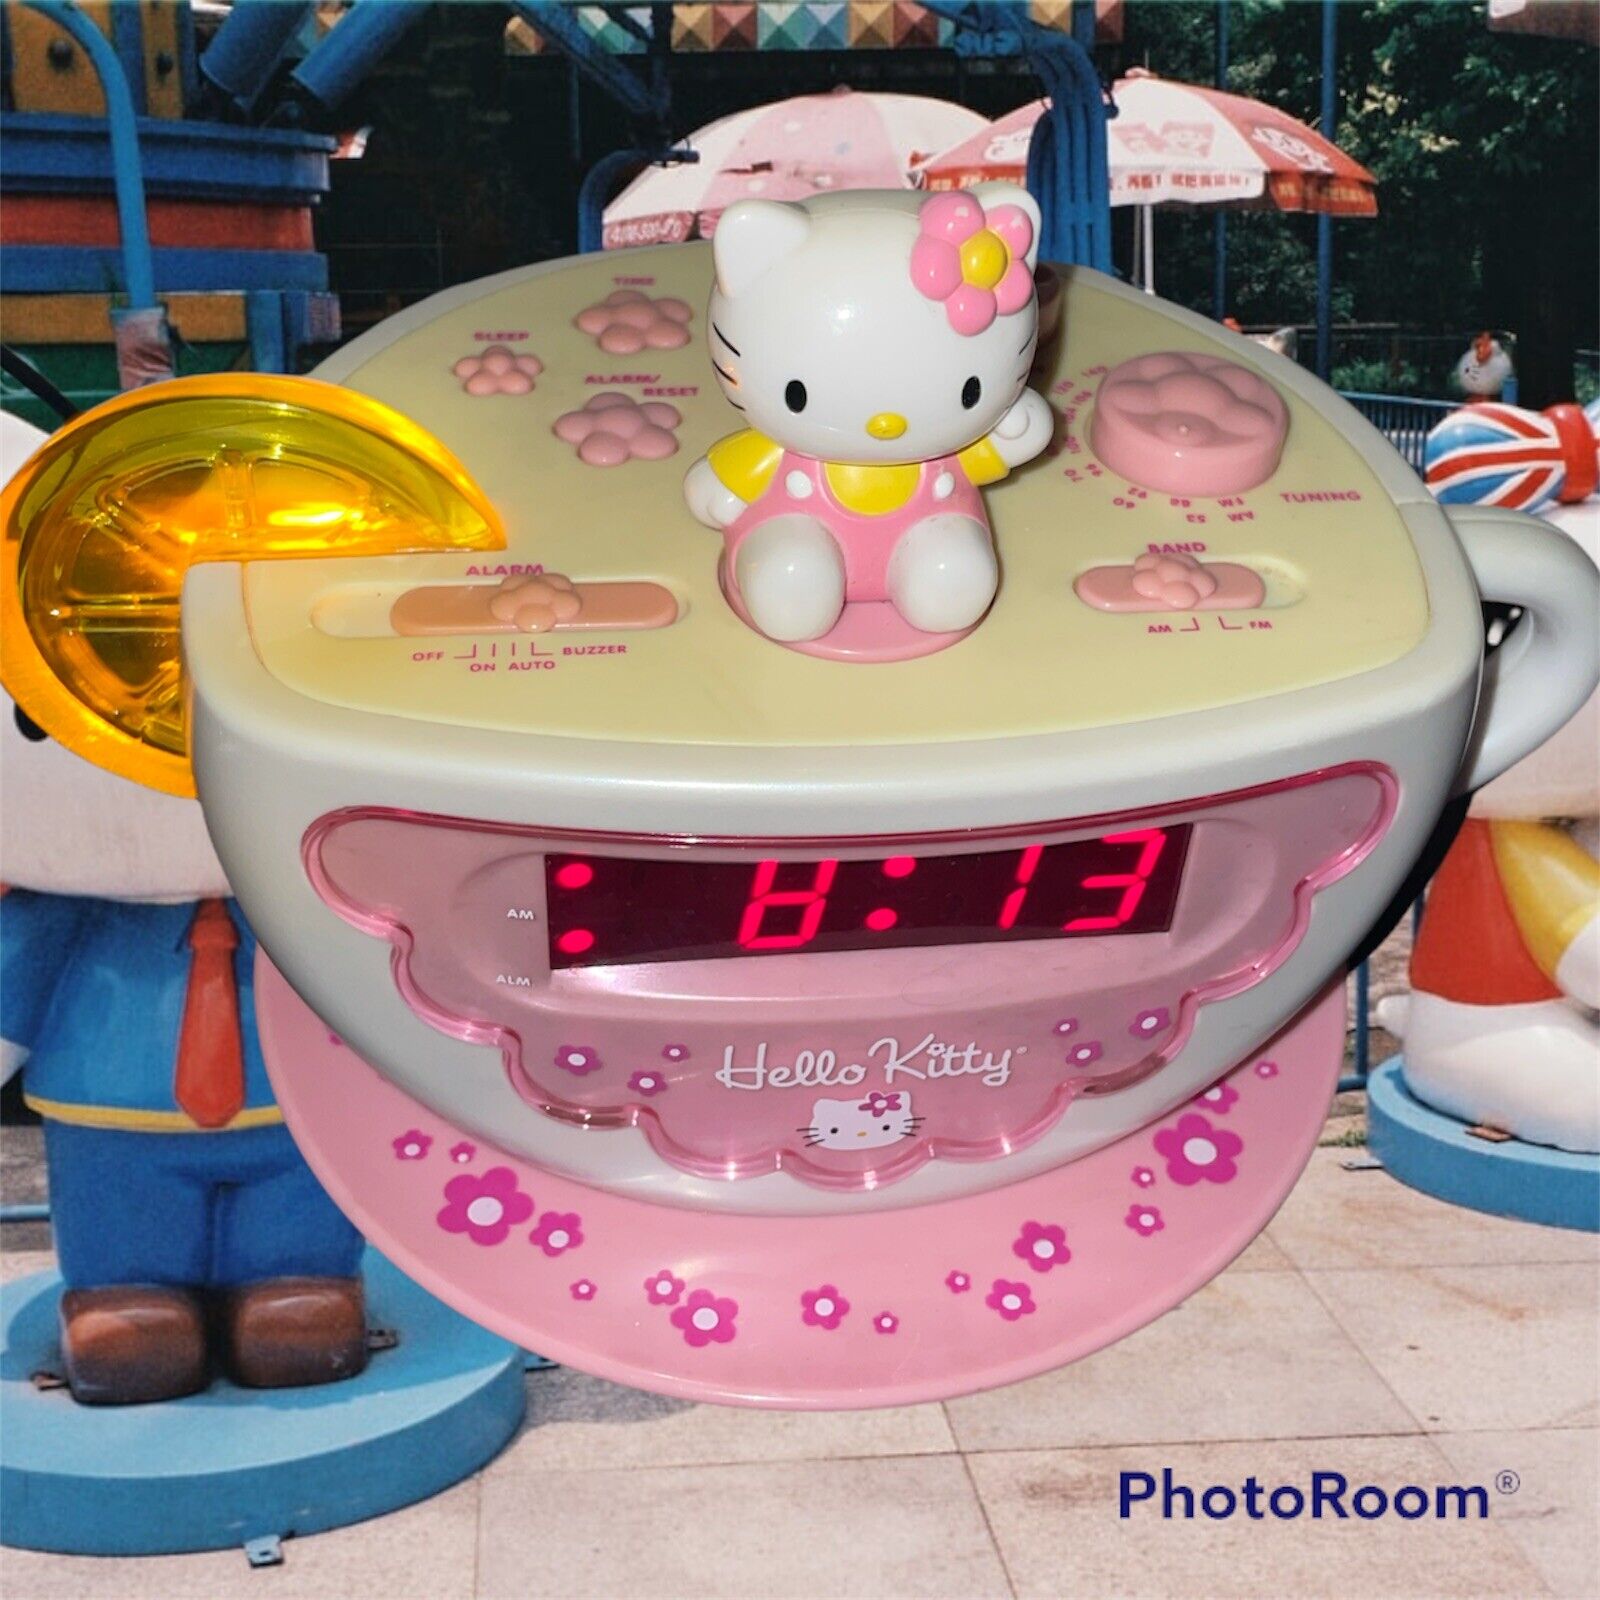 HELLO KITTY Tea Cup Digital Alarm Clock Radio Night Light Model HK155 WORKS MINT